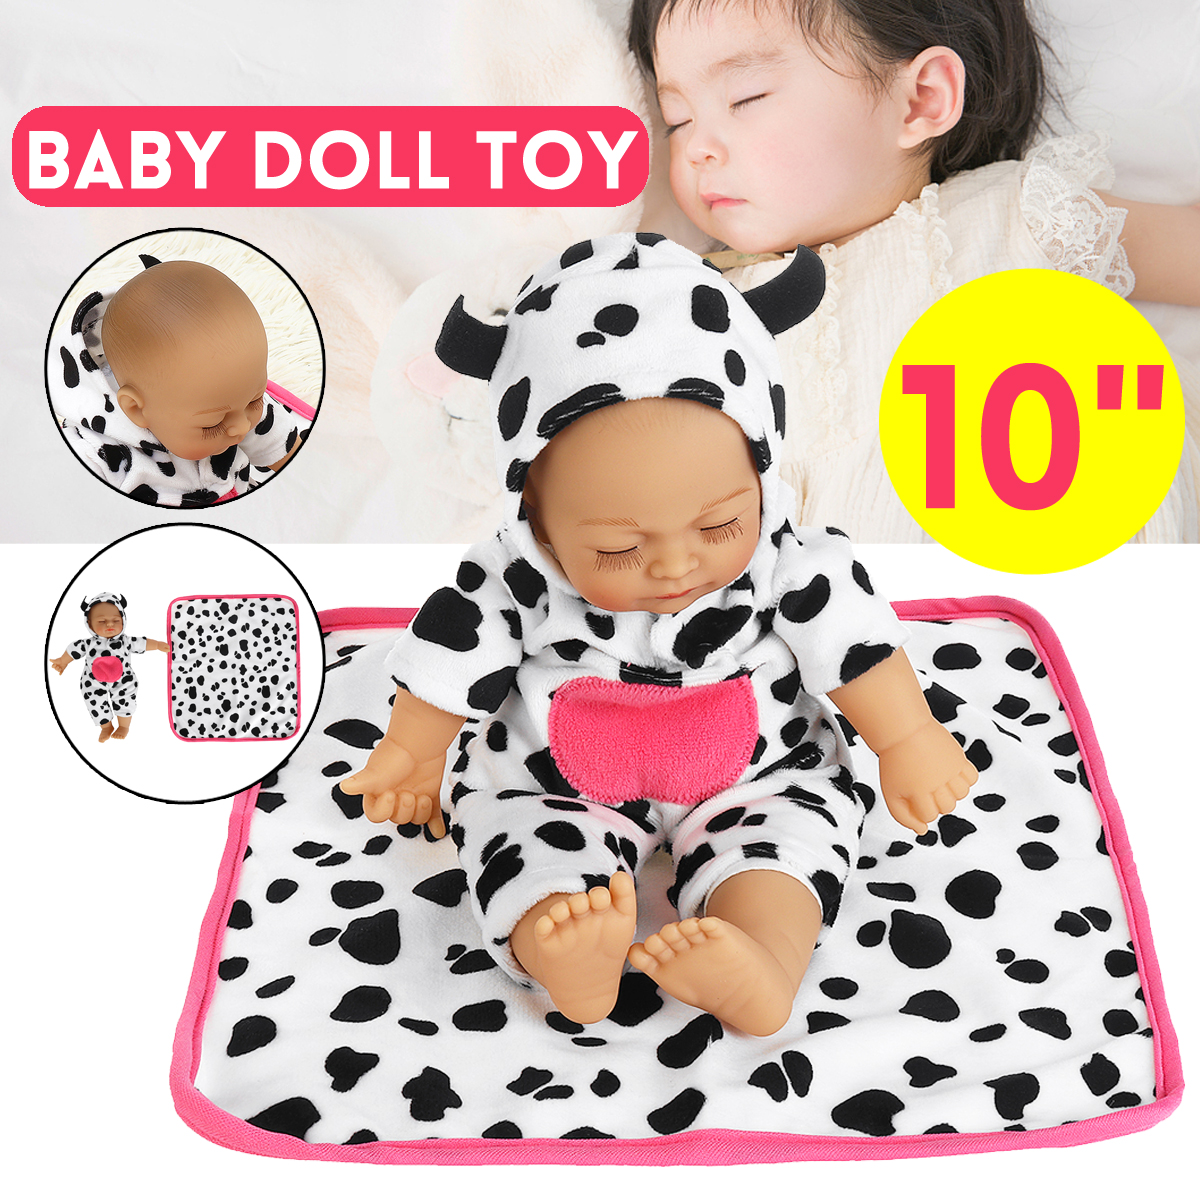 Lifelike-Full-Body-Silicone-Reborn-Dolls-Toys-Vinyl-Soft--Reborn-Toddler-Baby-Doll-Newborn-Cute-Toy--1807495-1